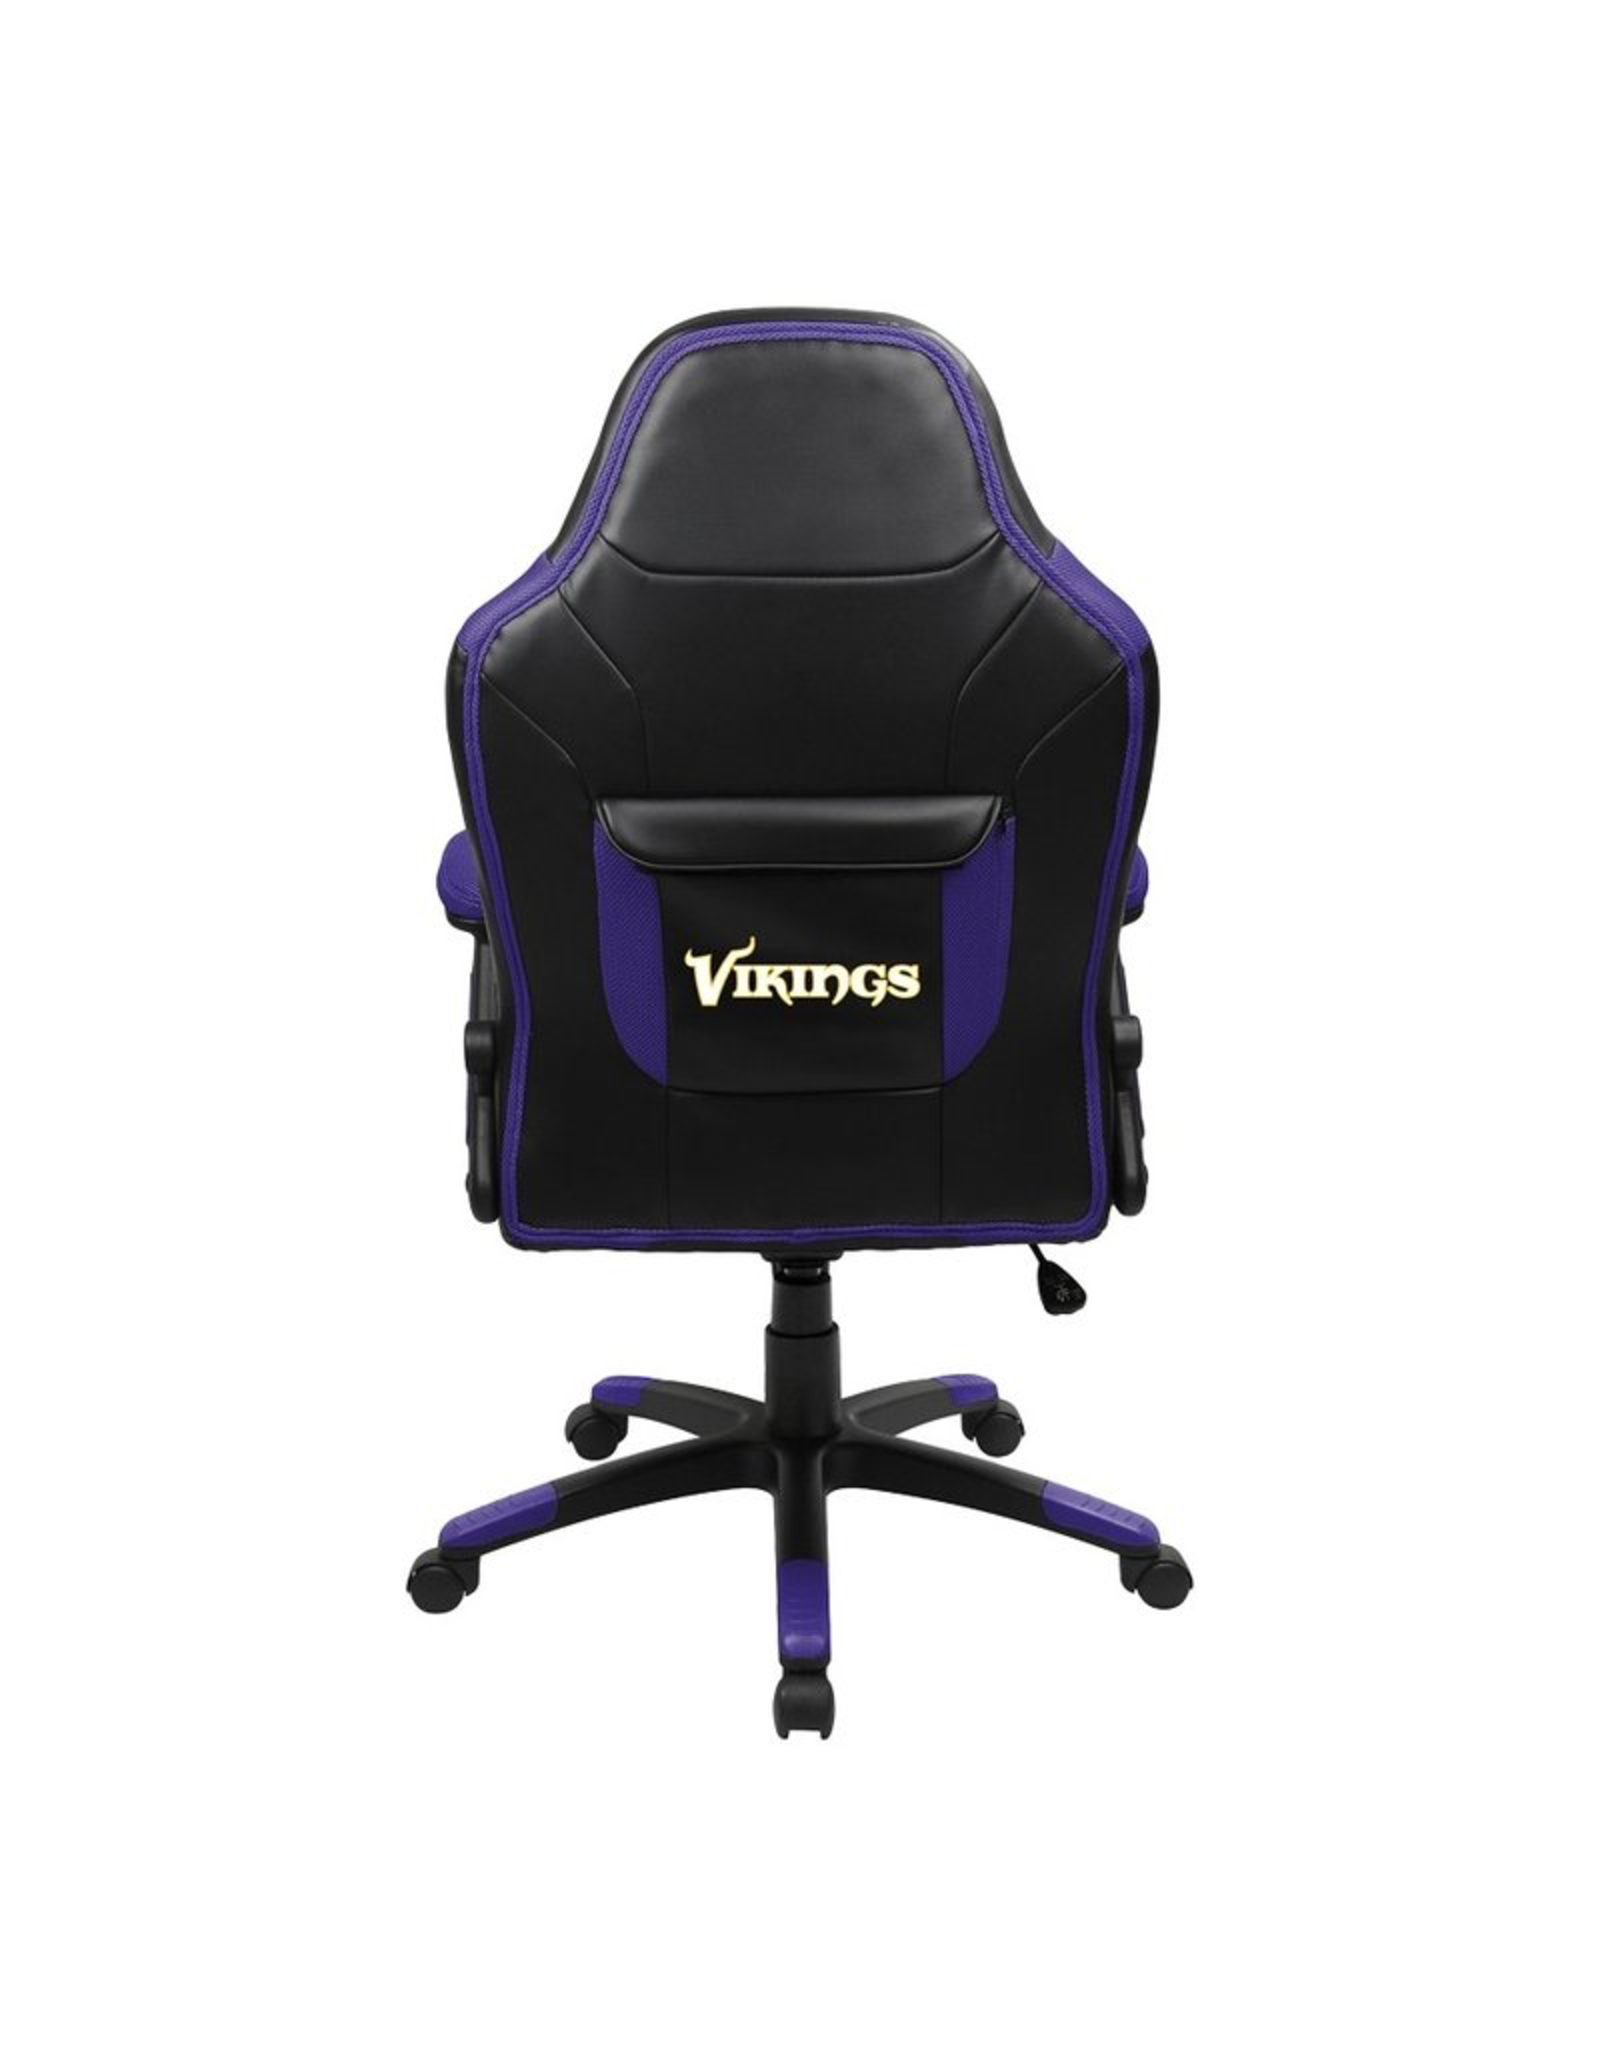 Imperial Minnesota Vikings Gaming / Office Chair